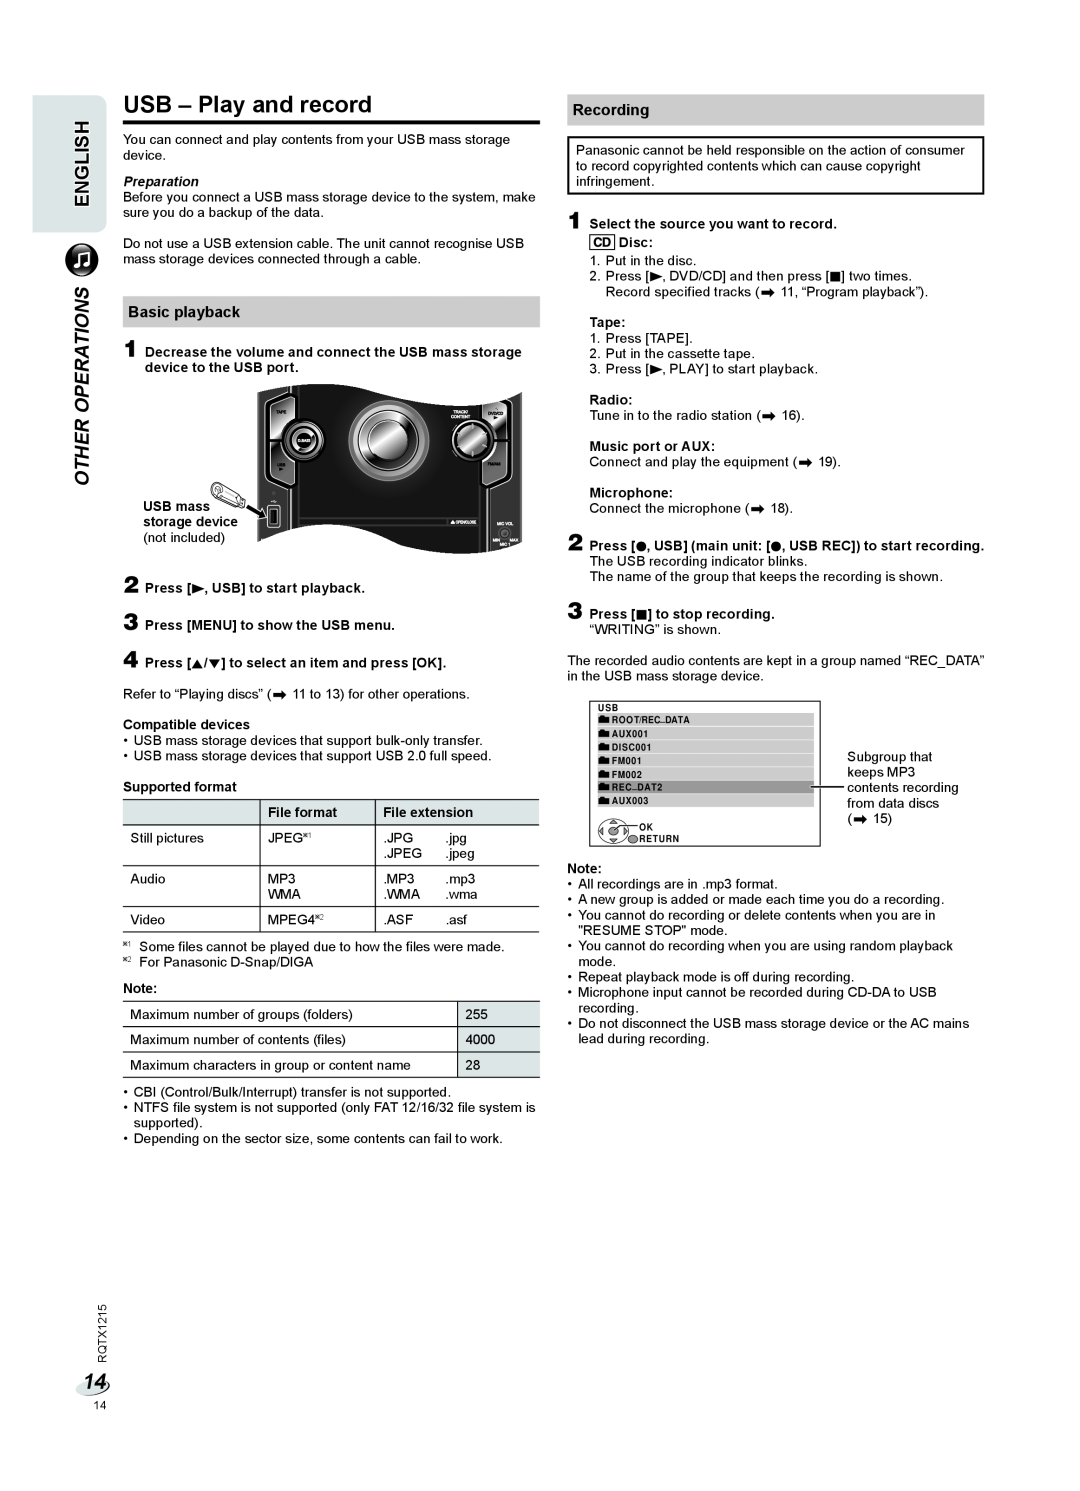 Panasonic SC-VKX60 USB - Play and record, Operations, Other, English, Basic playback, Recording, Preparation 